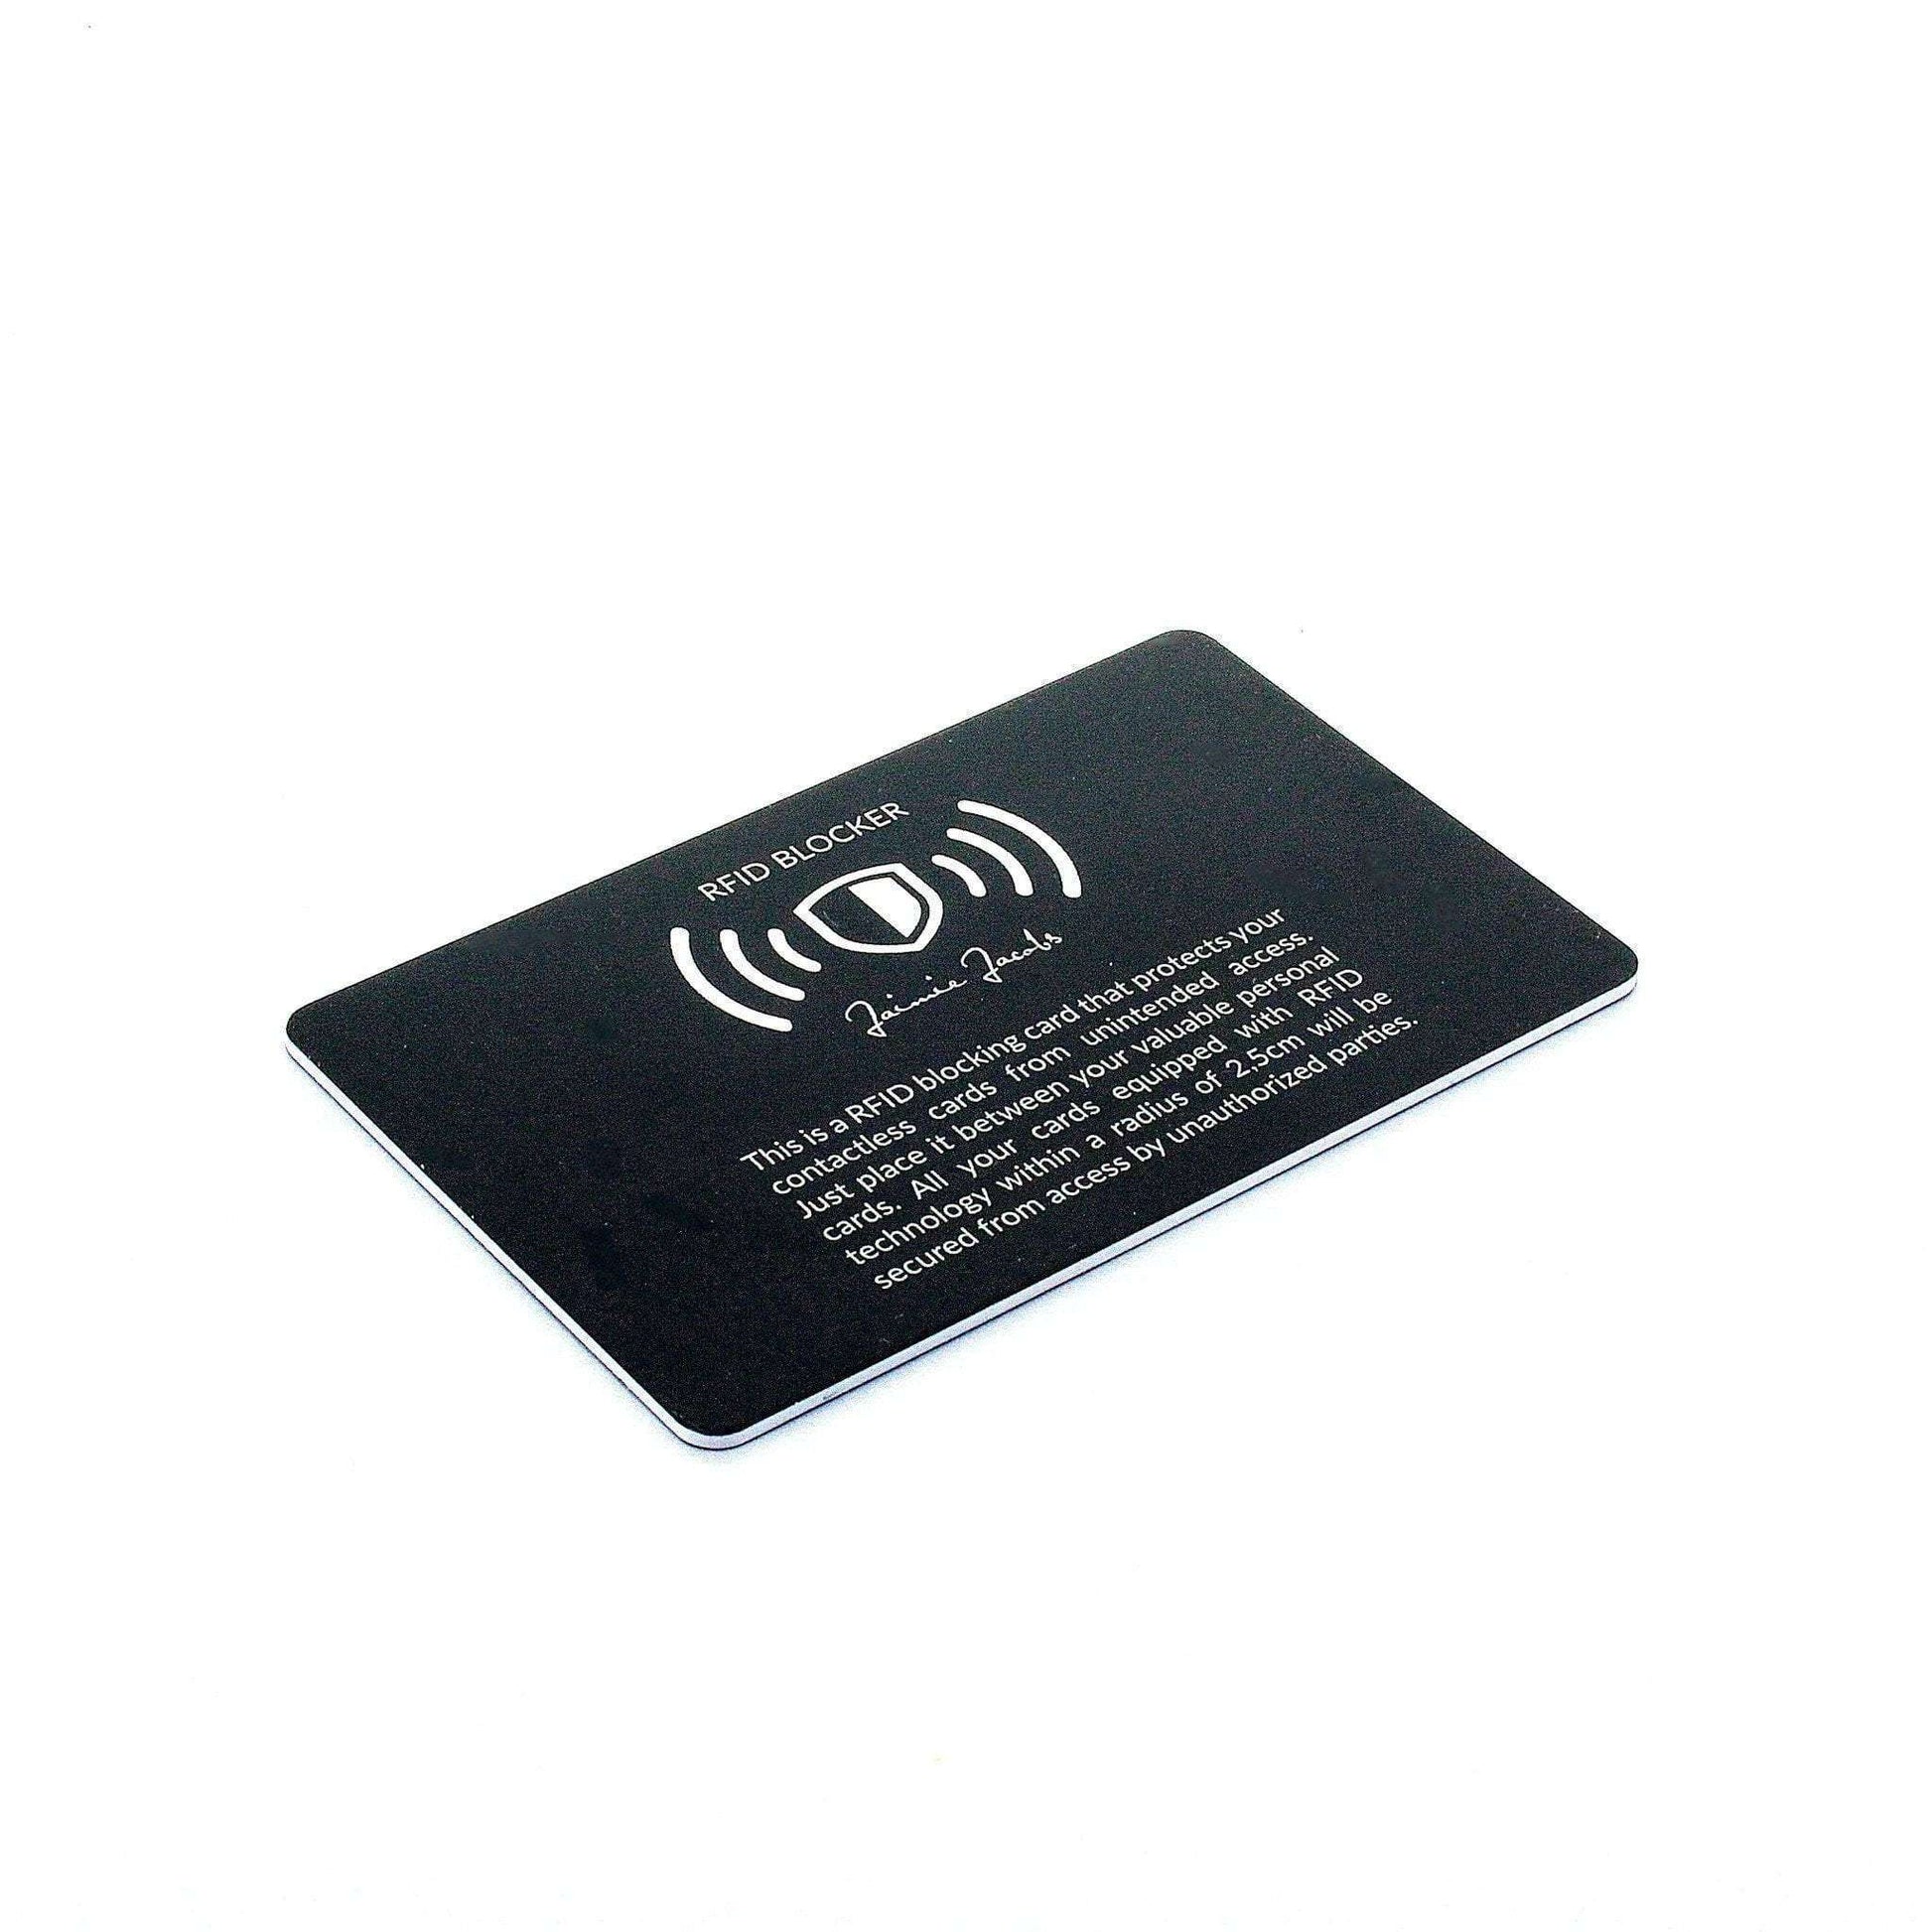 RFID Blocking Cards 3 Pack Mighty Card RFID Protection RFID Wallet Security  Card Blocker Rfid Blocking Rfid Blocking Sleeve 